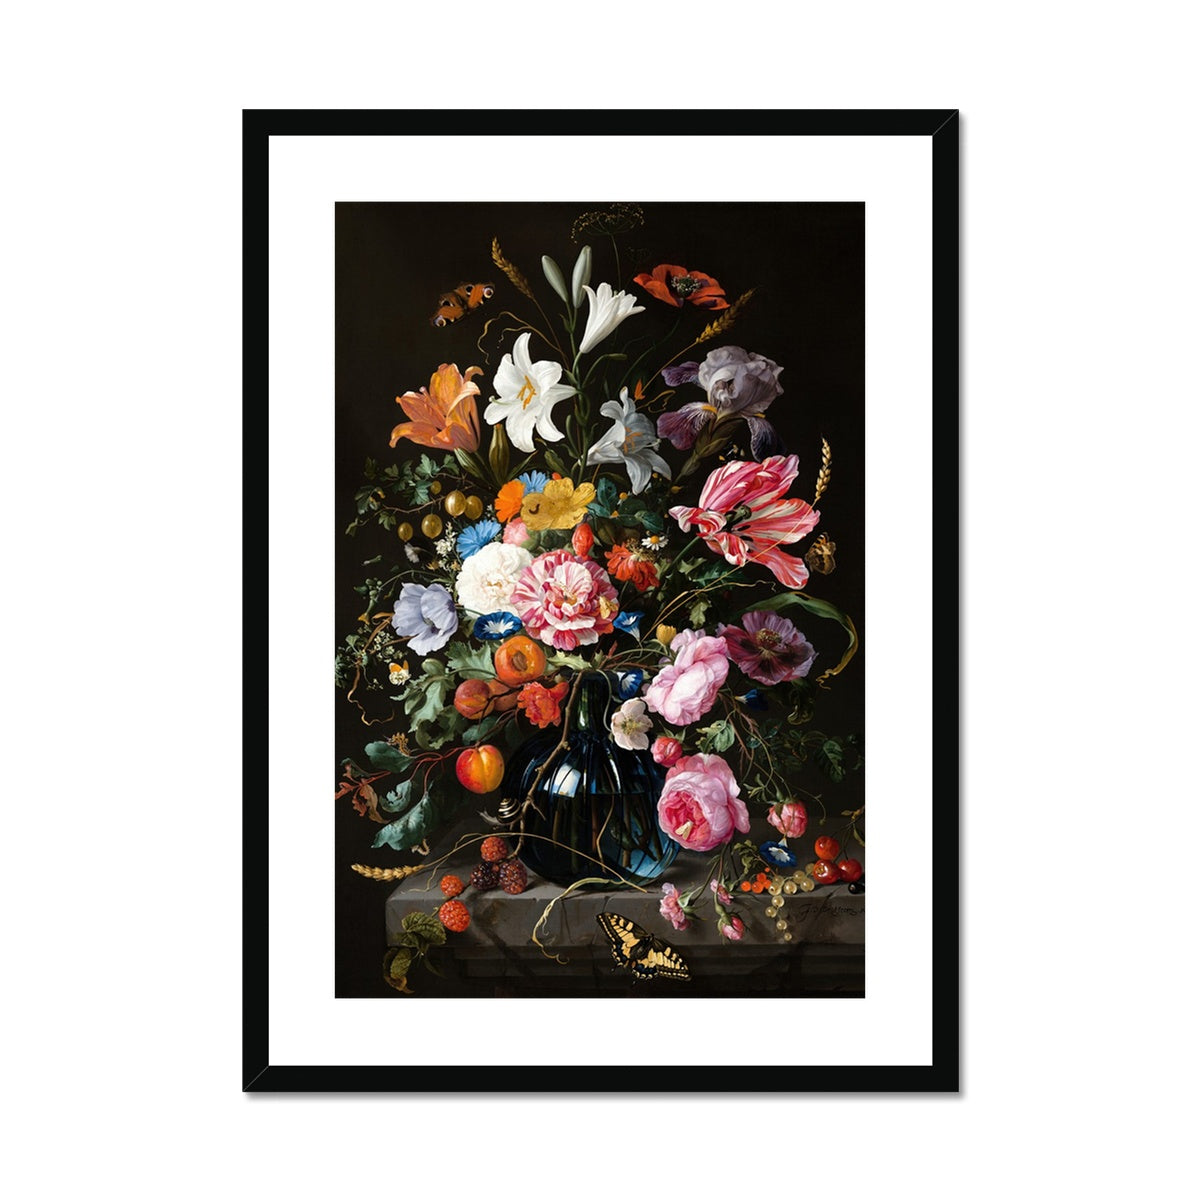 'Vase of Flowers' Still Life by Jan Davidsz de Heem. Framed Open Edition Fine Art Print. Historic Art